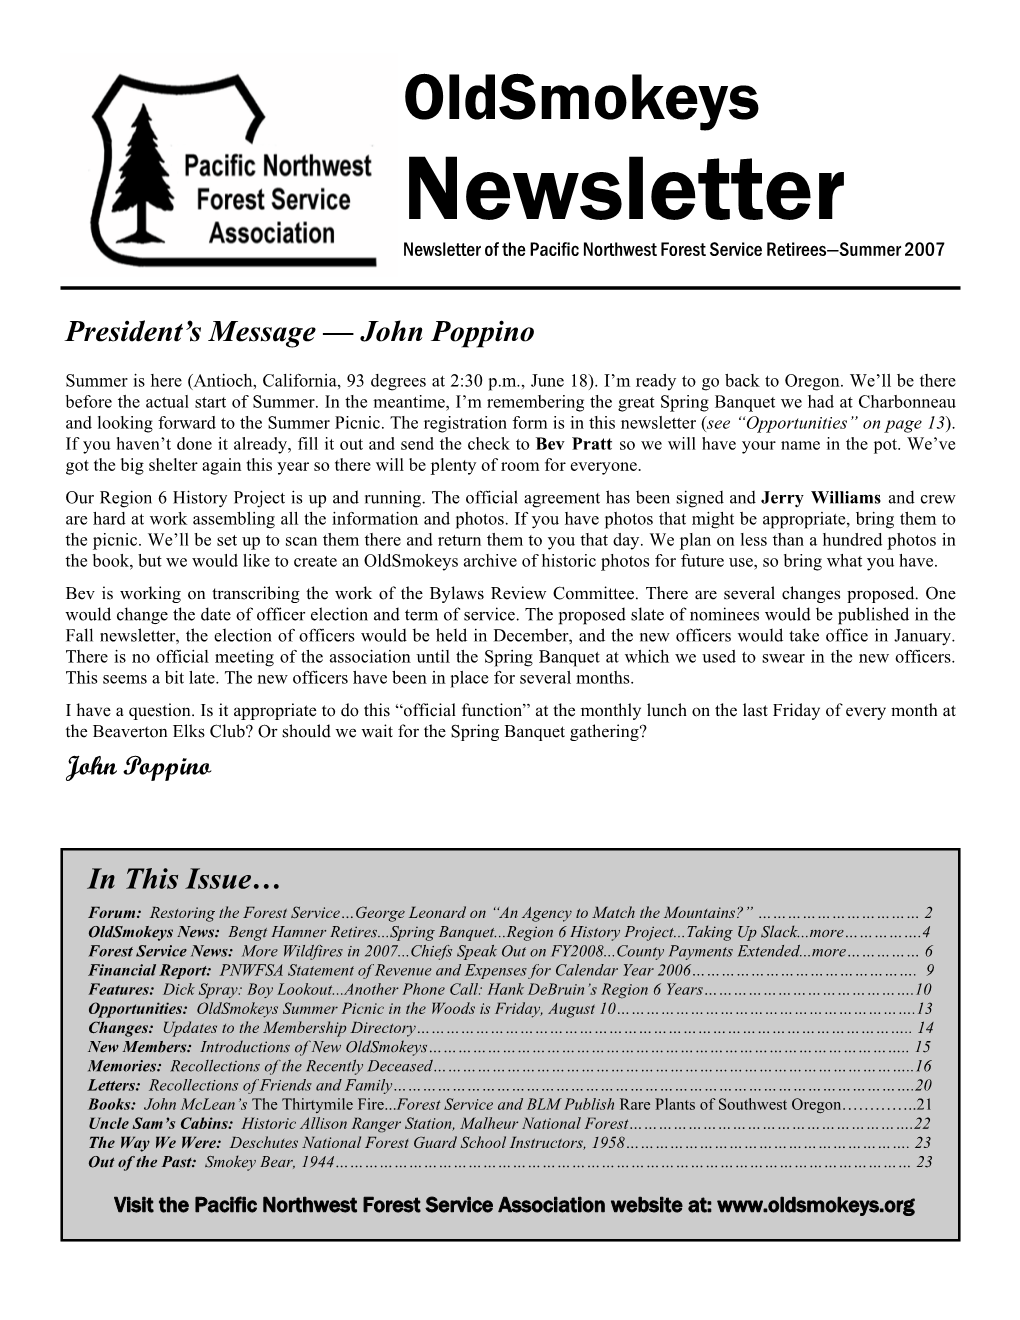 PNWFSA Newsletter Summer 2007 Edit for Web.Pub